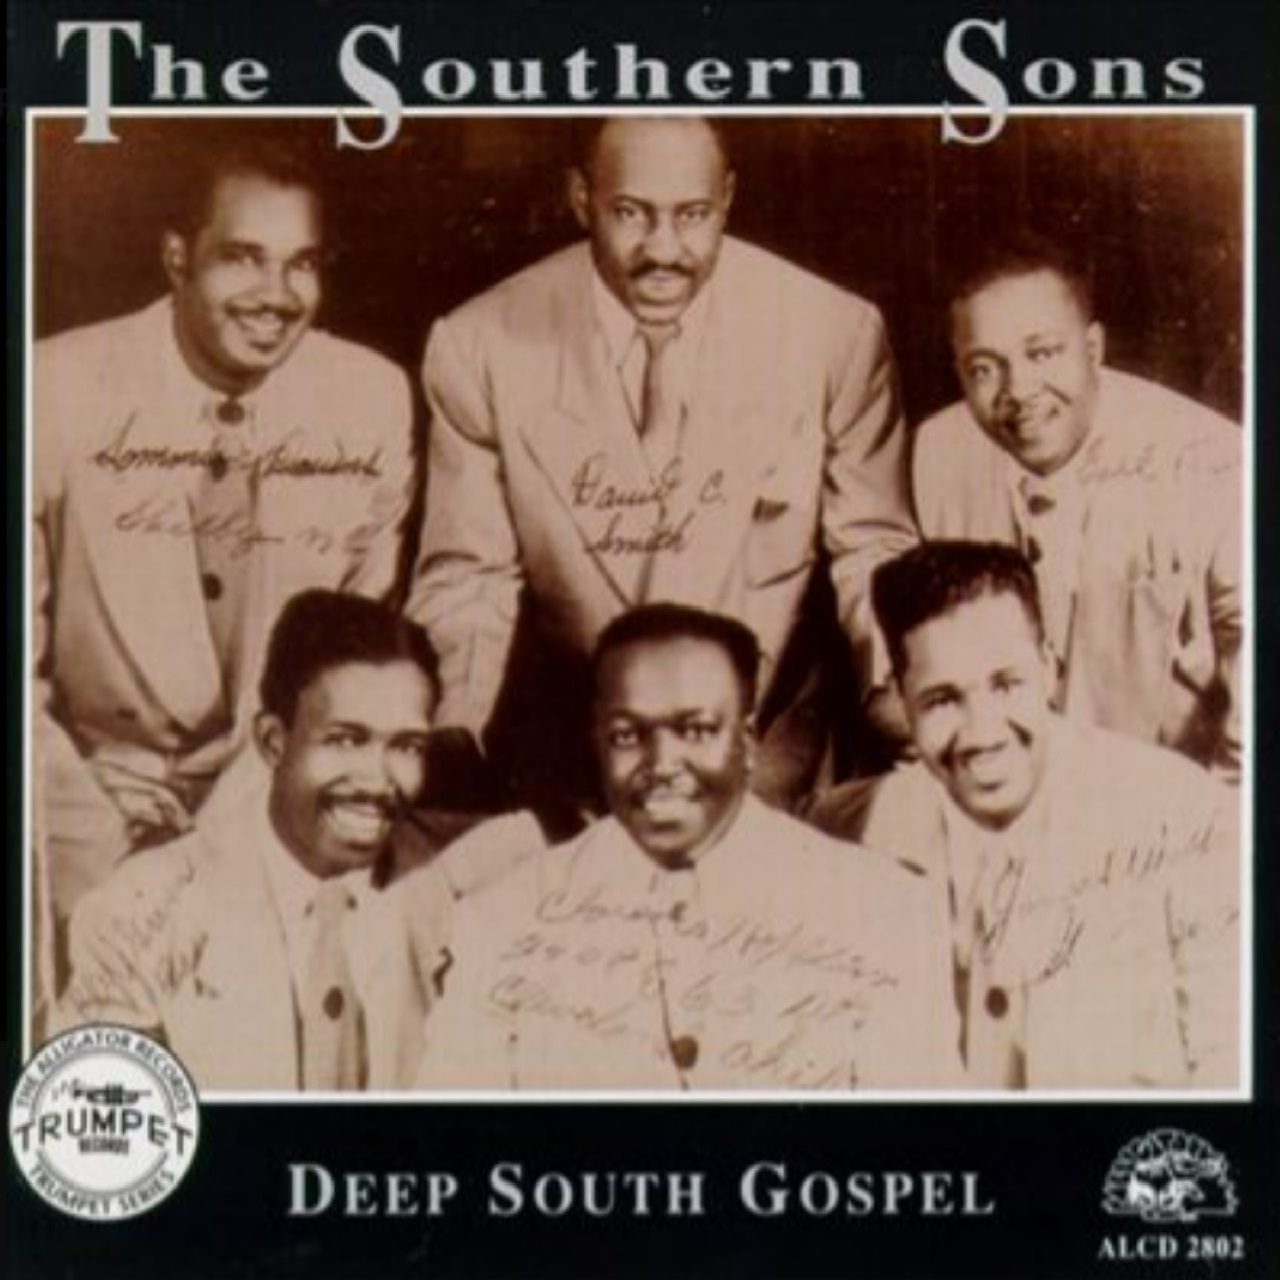 Southern Sons – Deep South Gospel cover album